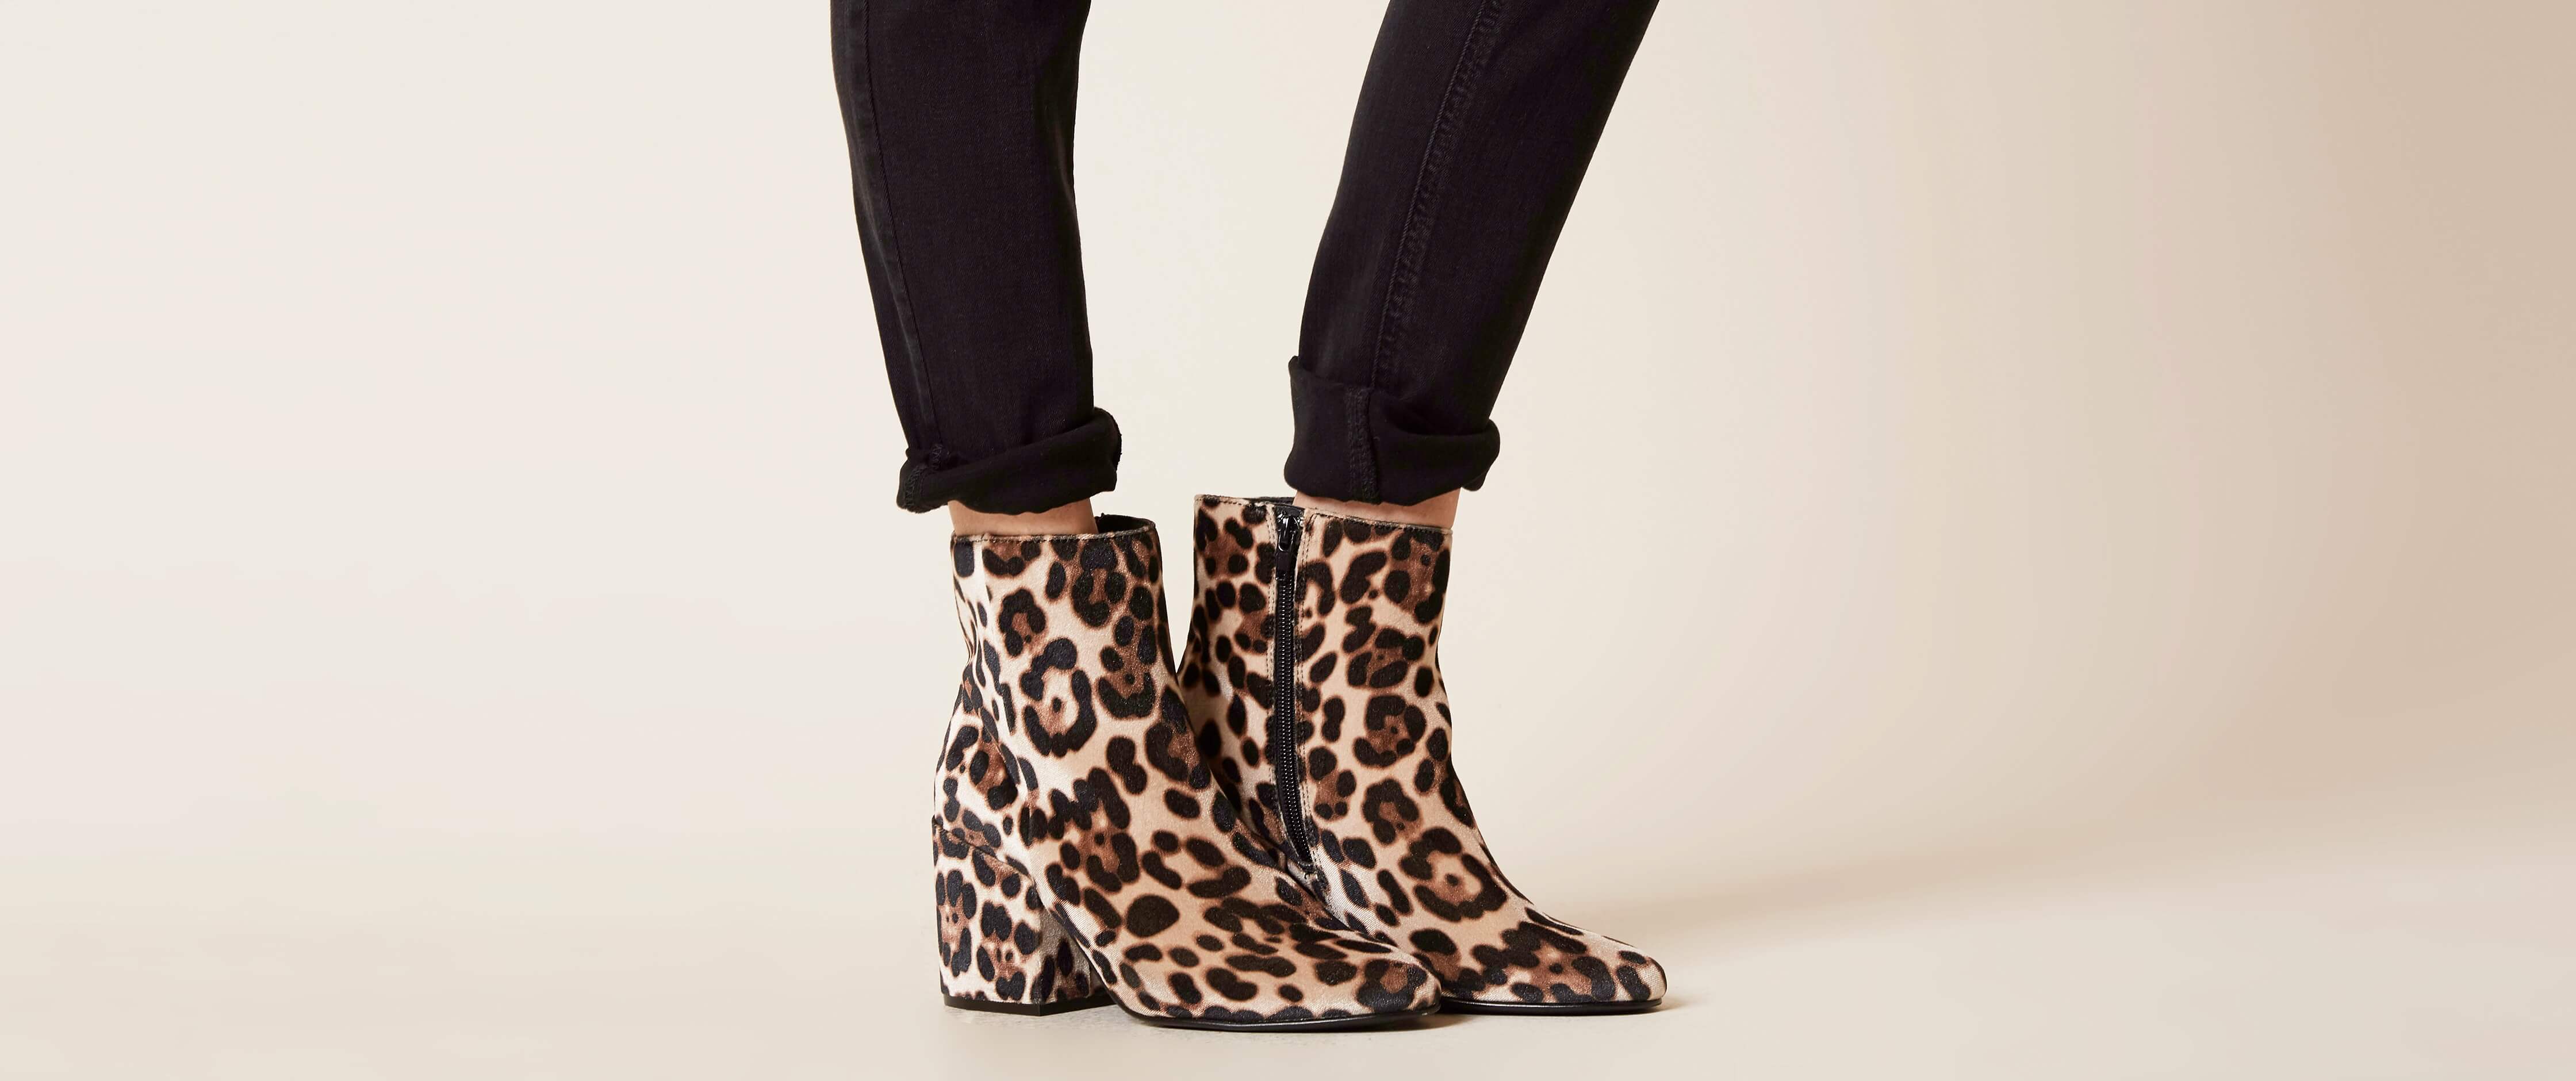 madden girl cheetah shoes